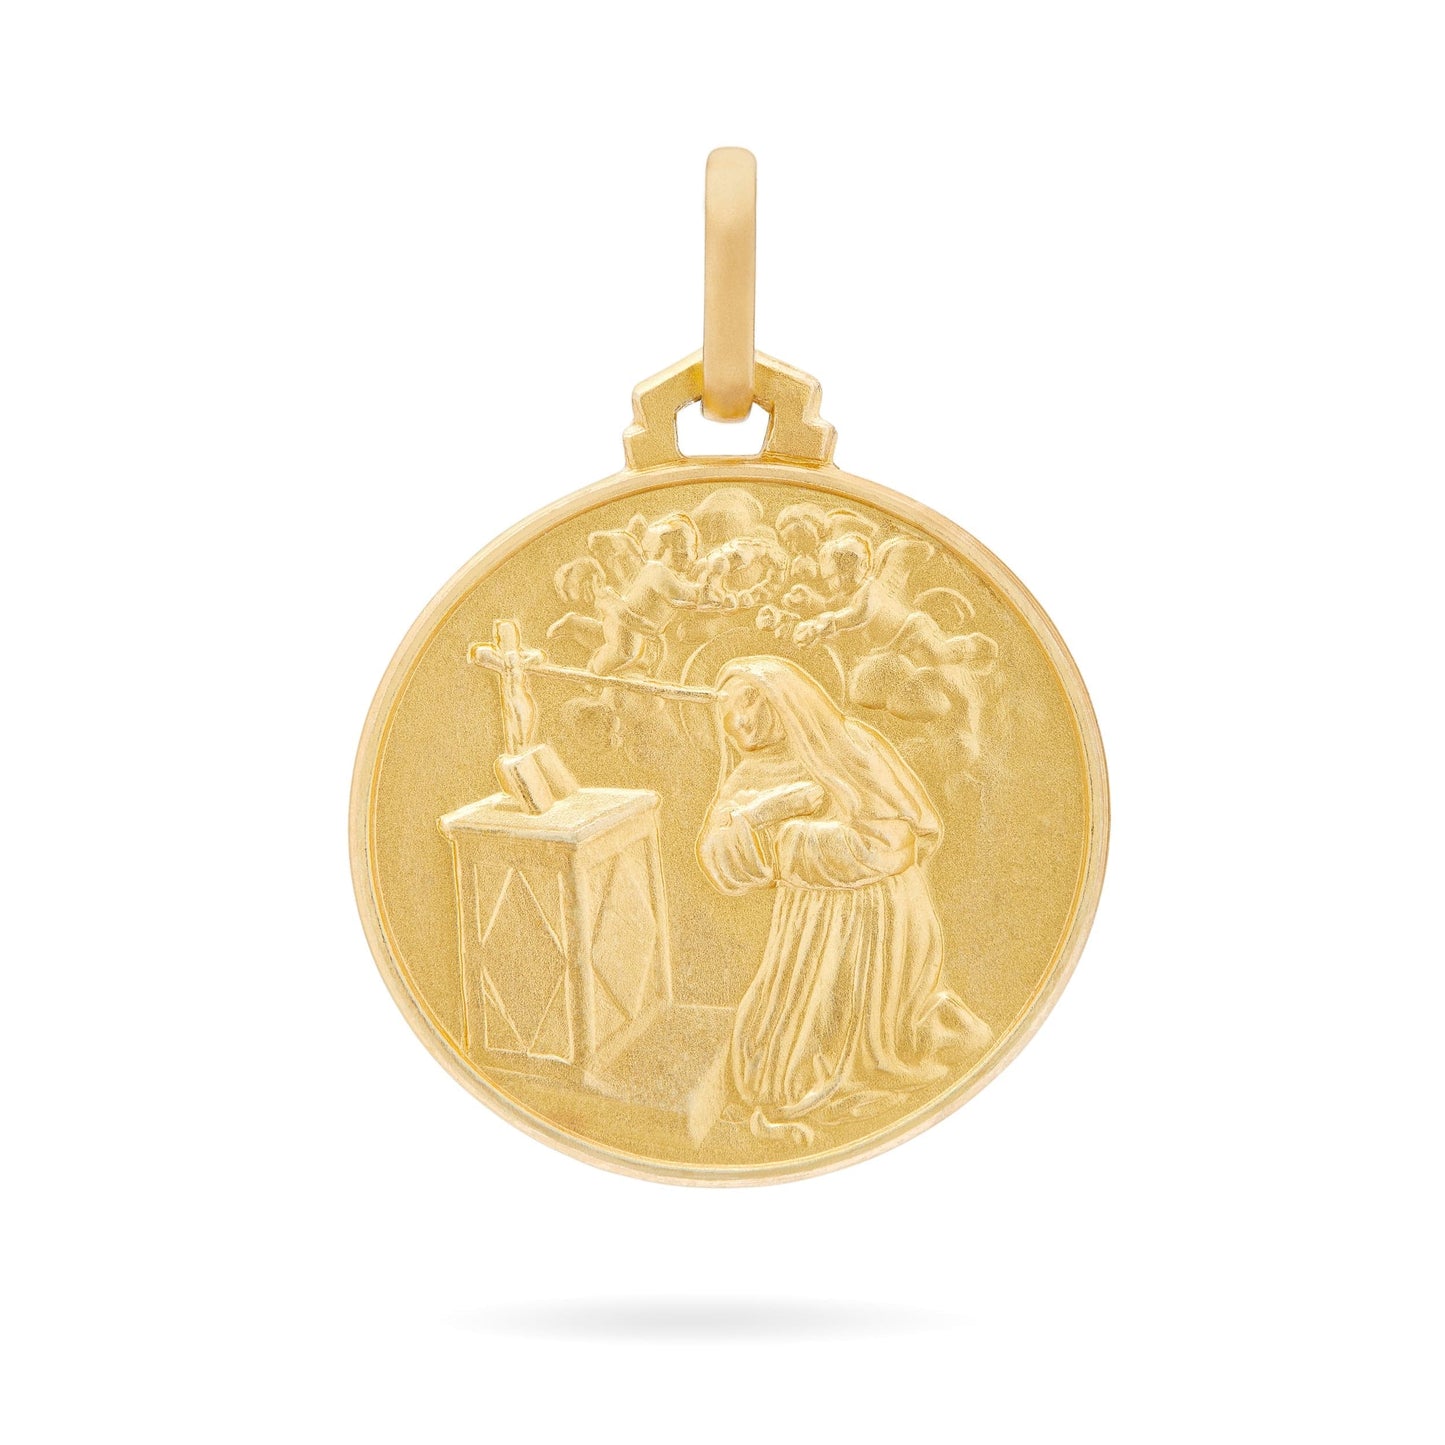 MONDO CATTOLICO Jewelry 18 mm (0.70 in) Gold medal of Saint Rita of Cascia